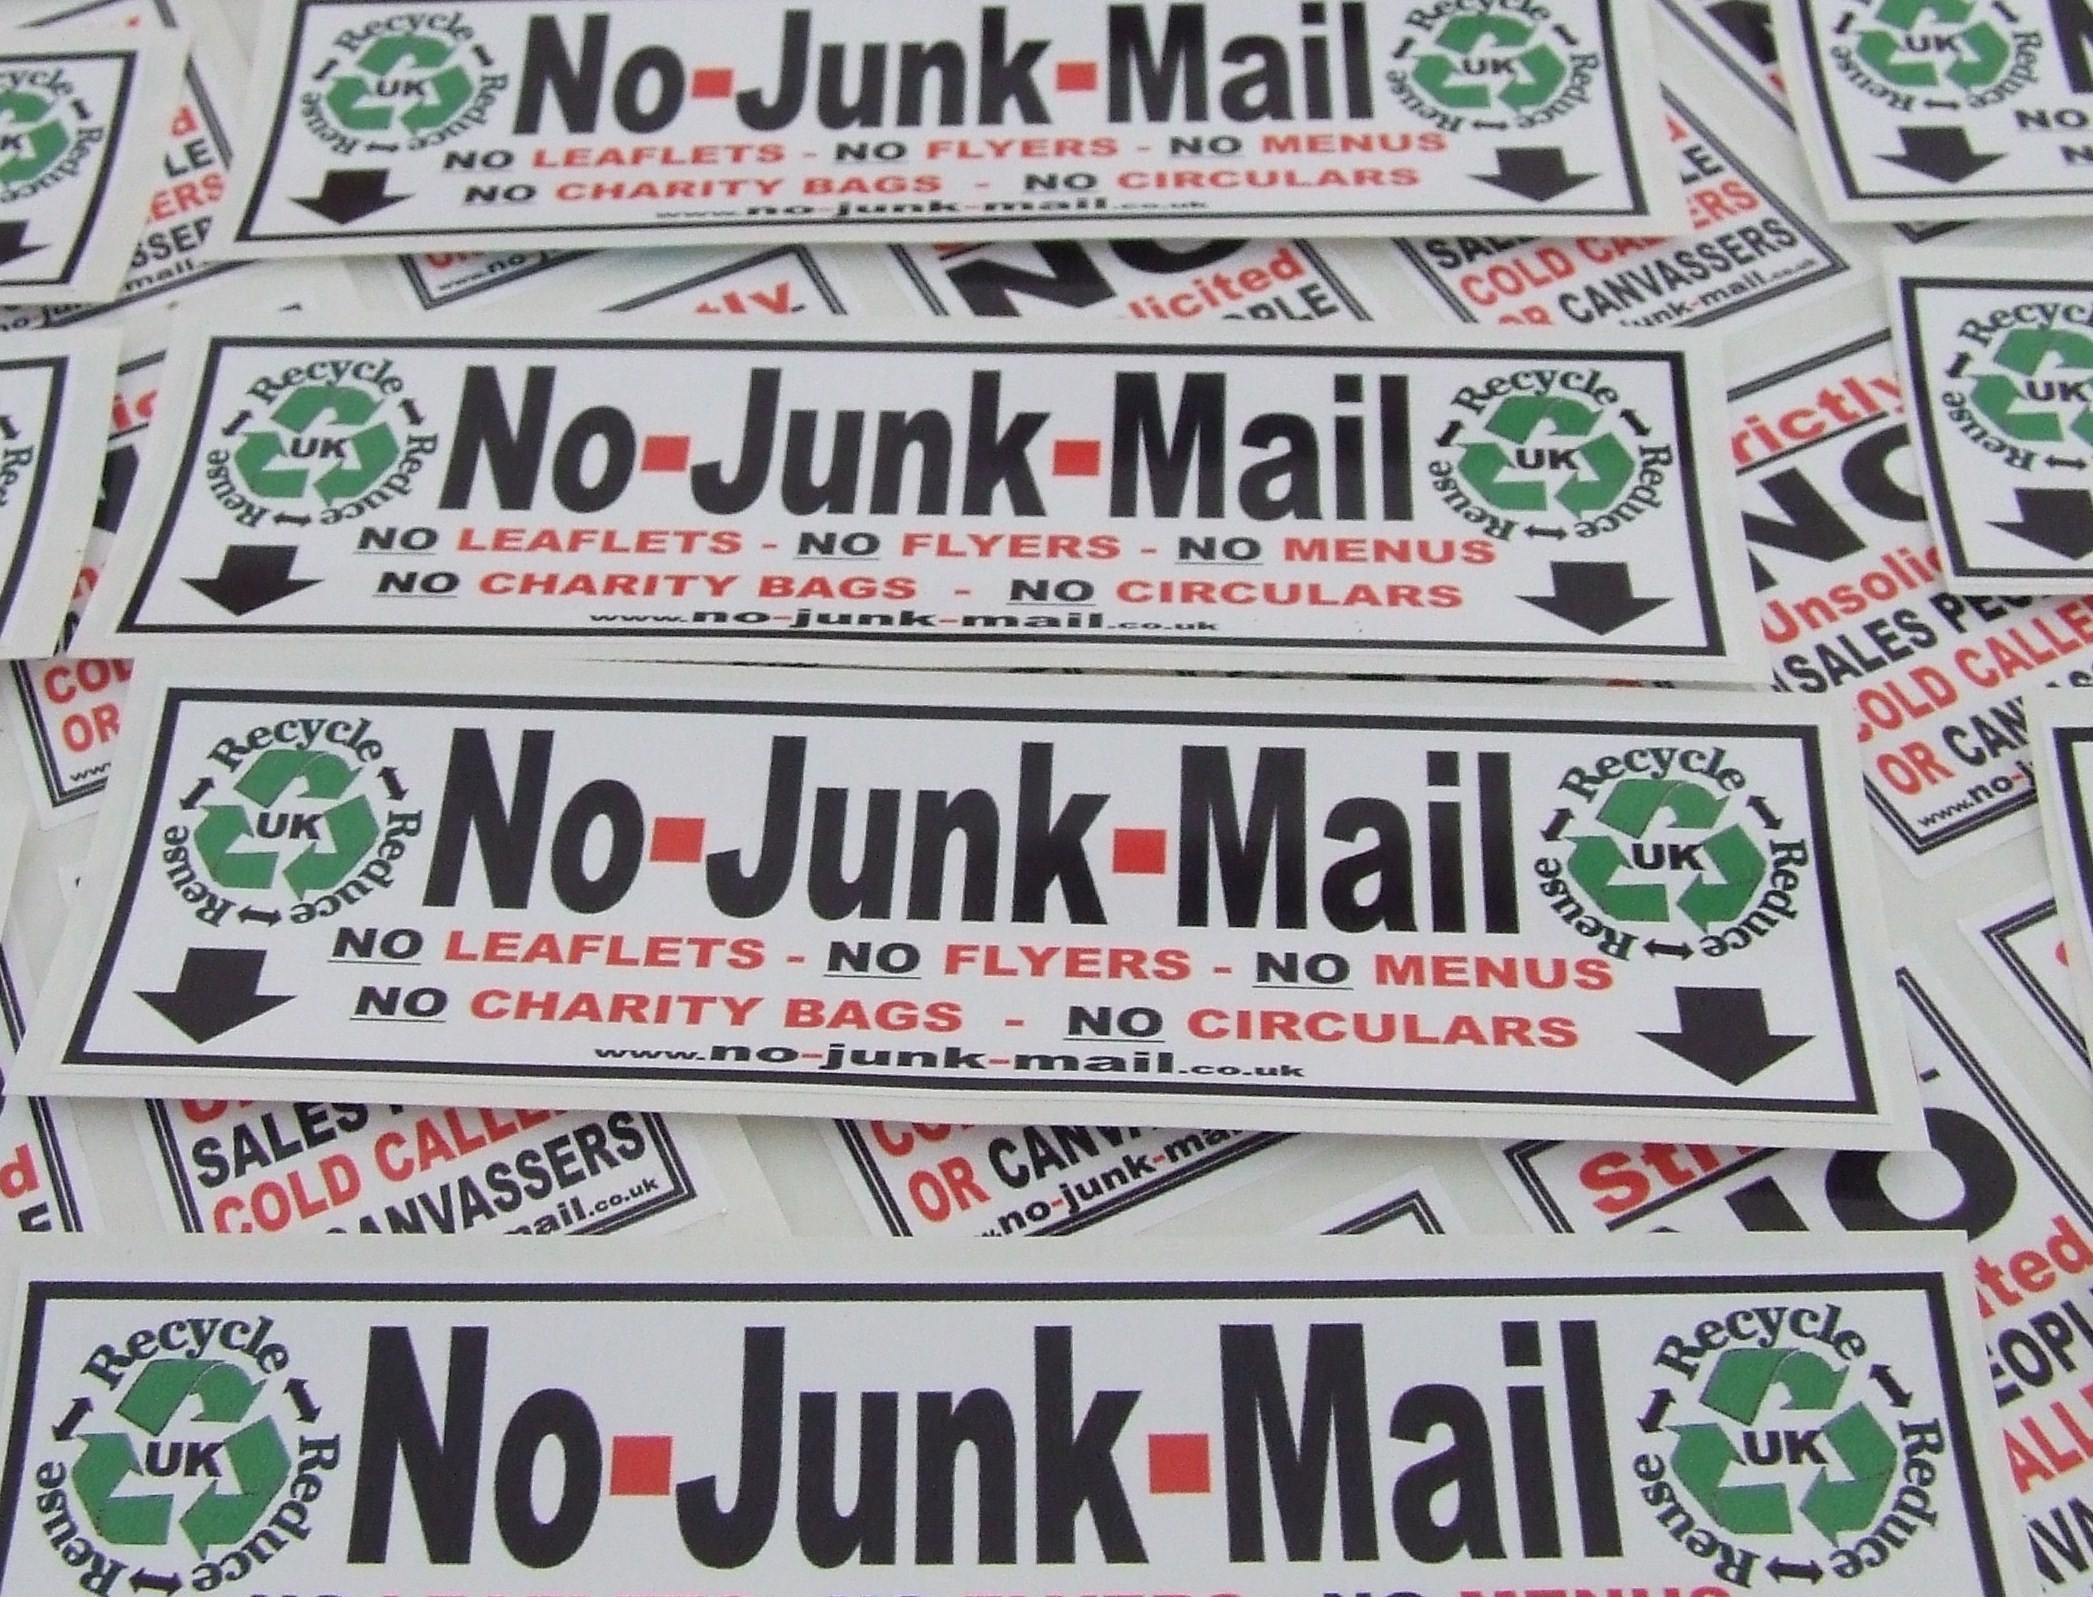 www.no-junk-mail.co.uk / 